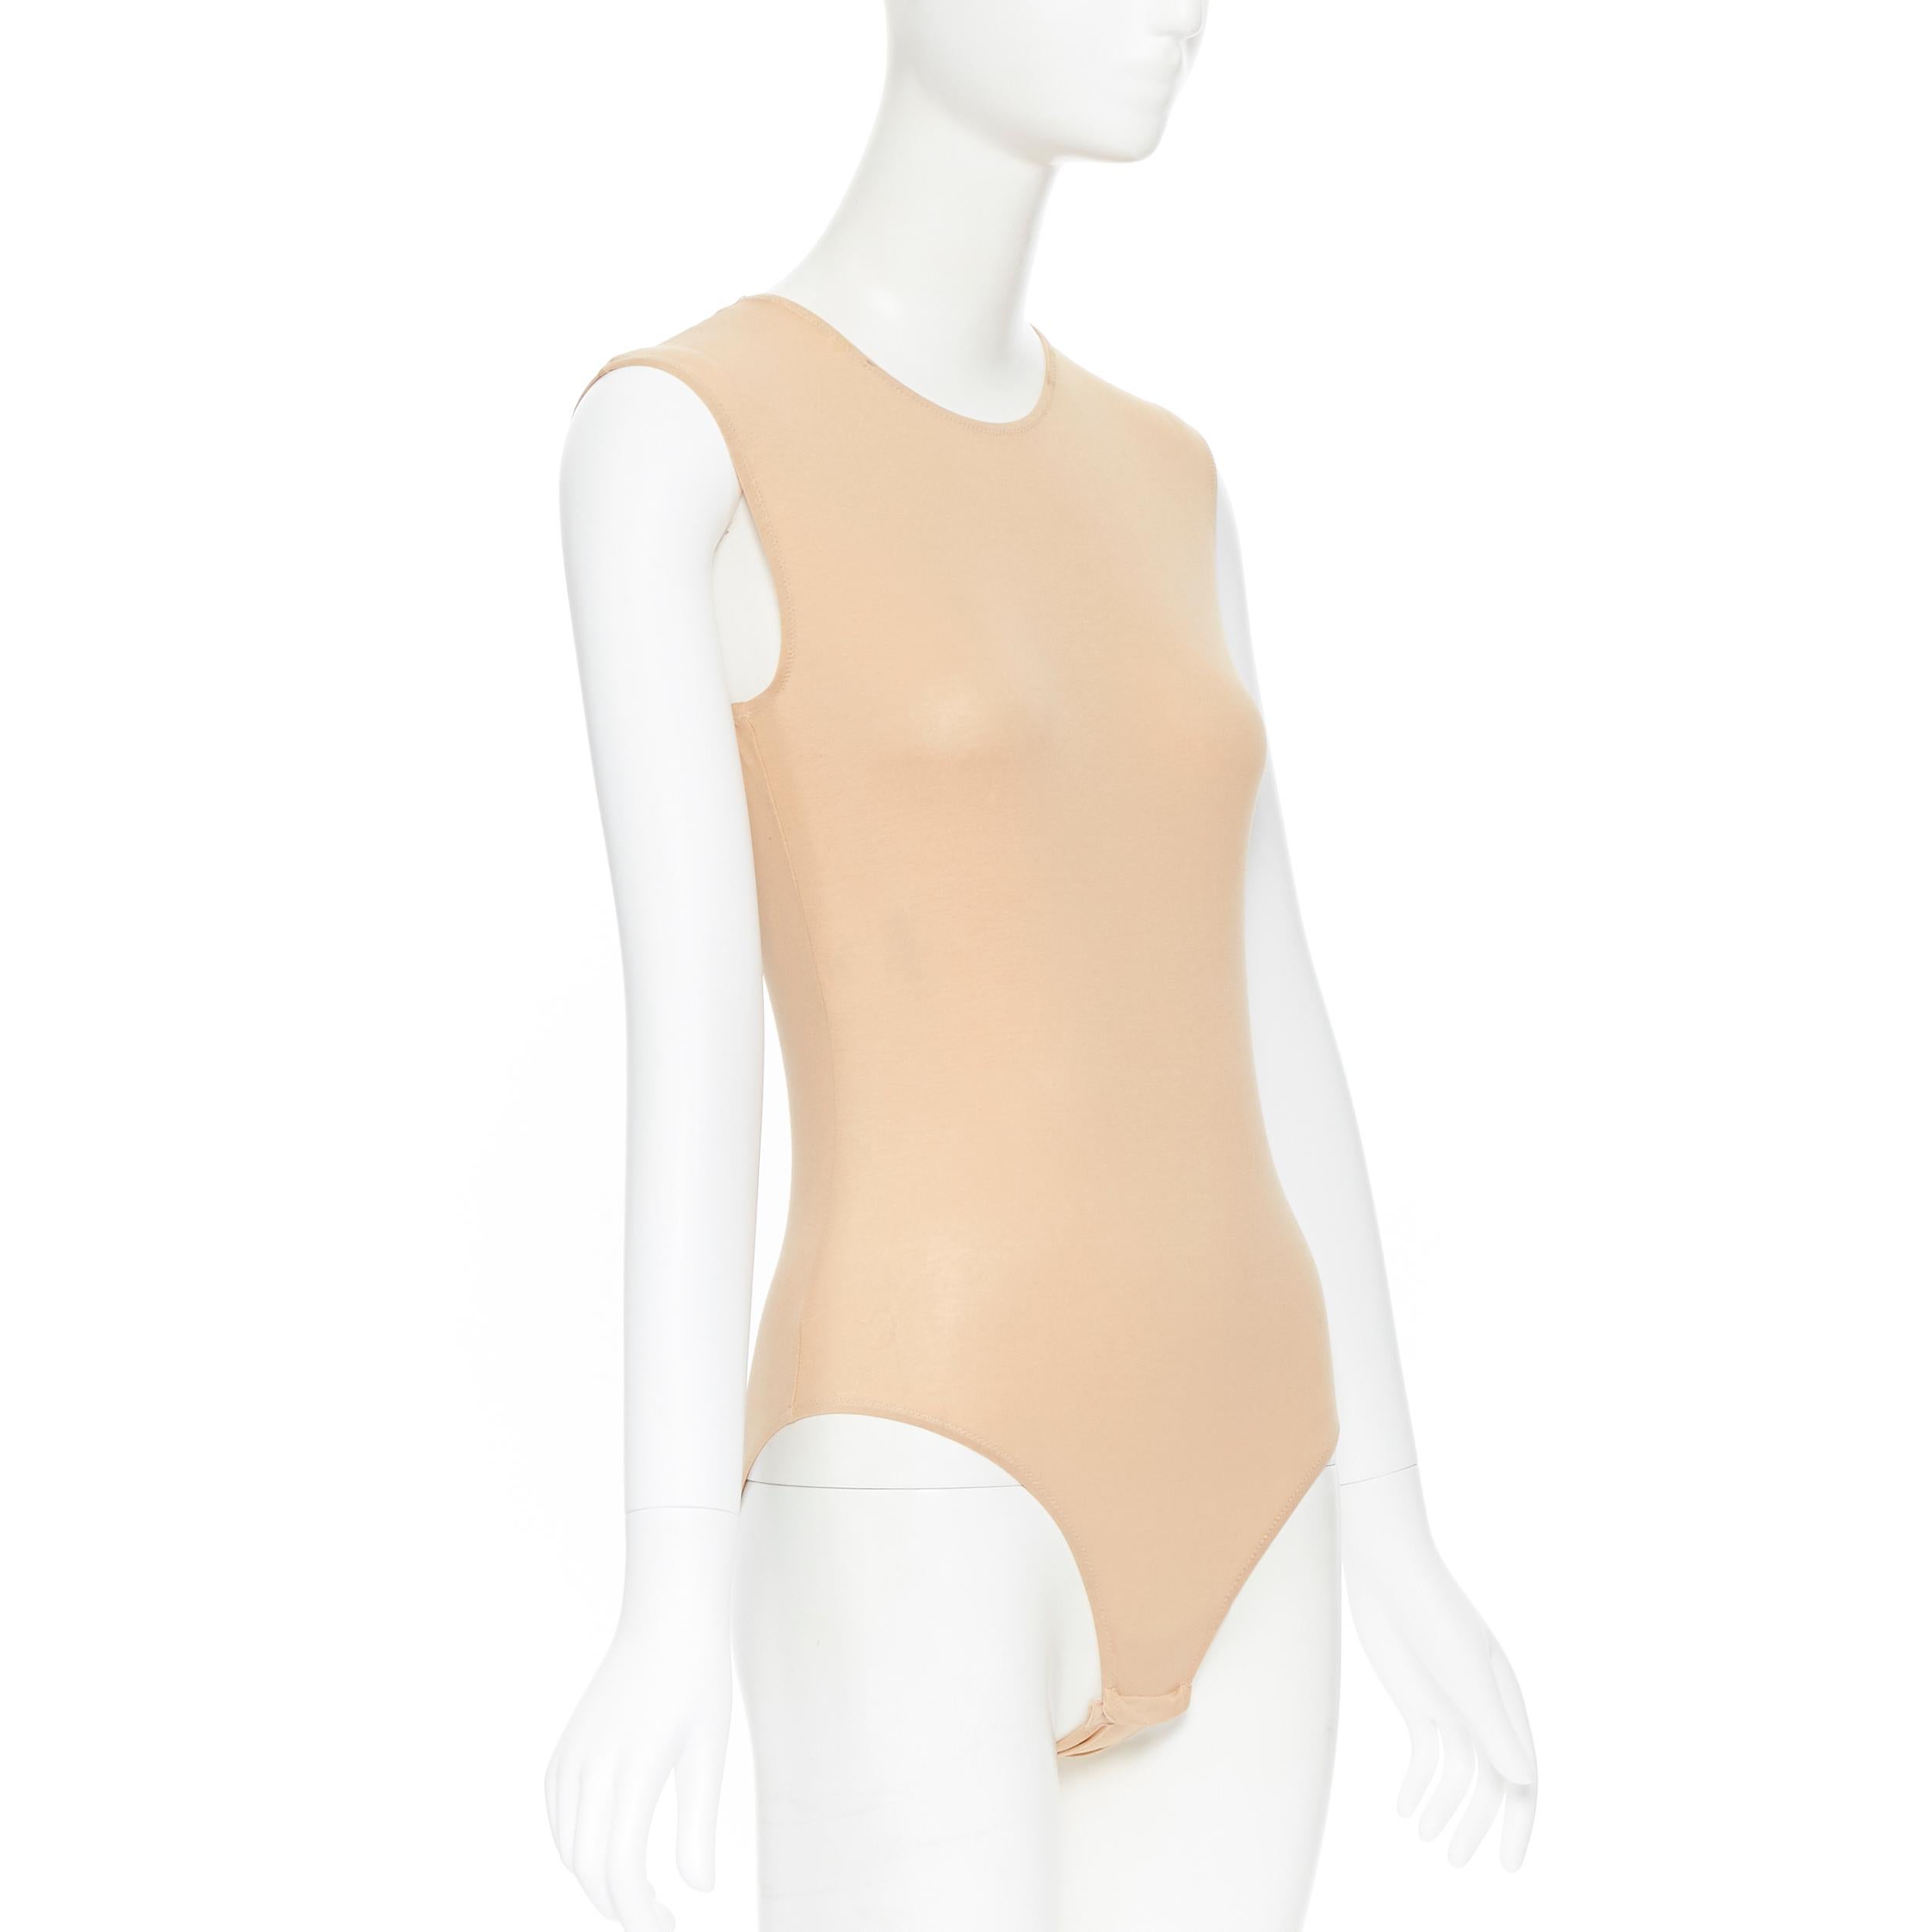 Beige MAISON MARTIN MARGIELA beige nude sleeveless bodysuit bodice top IT42